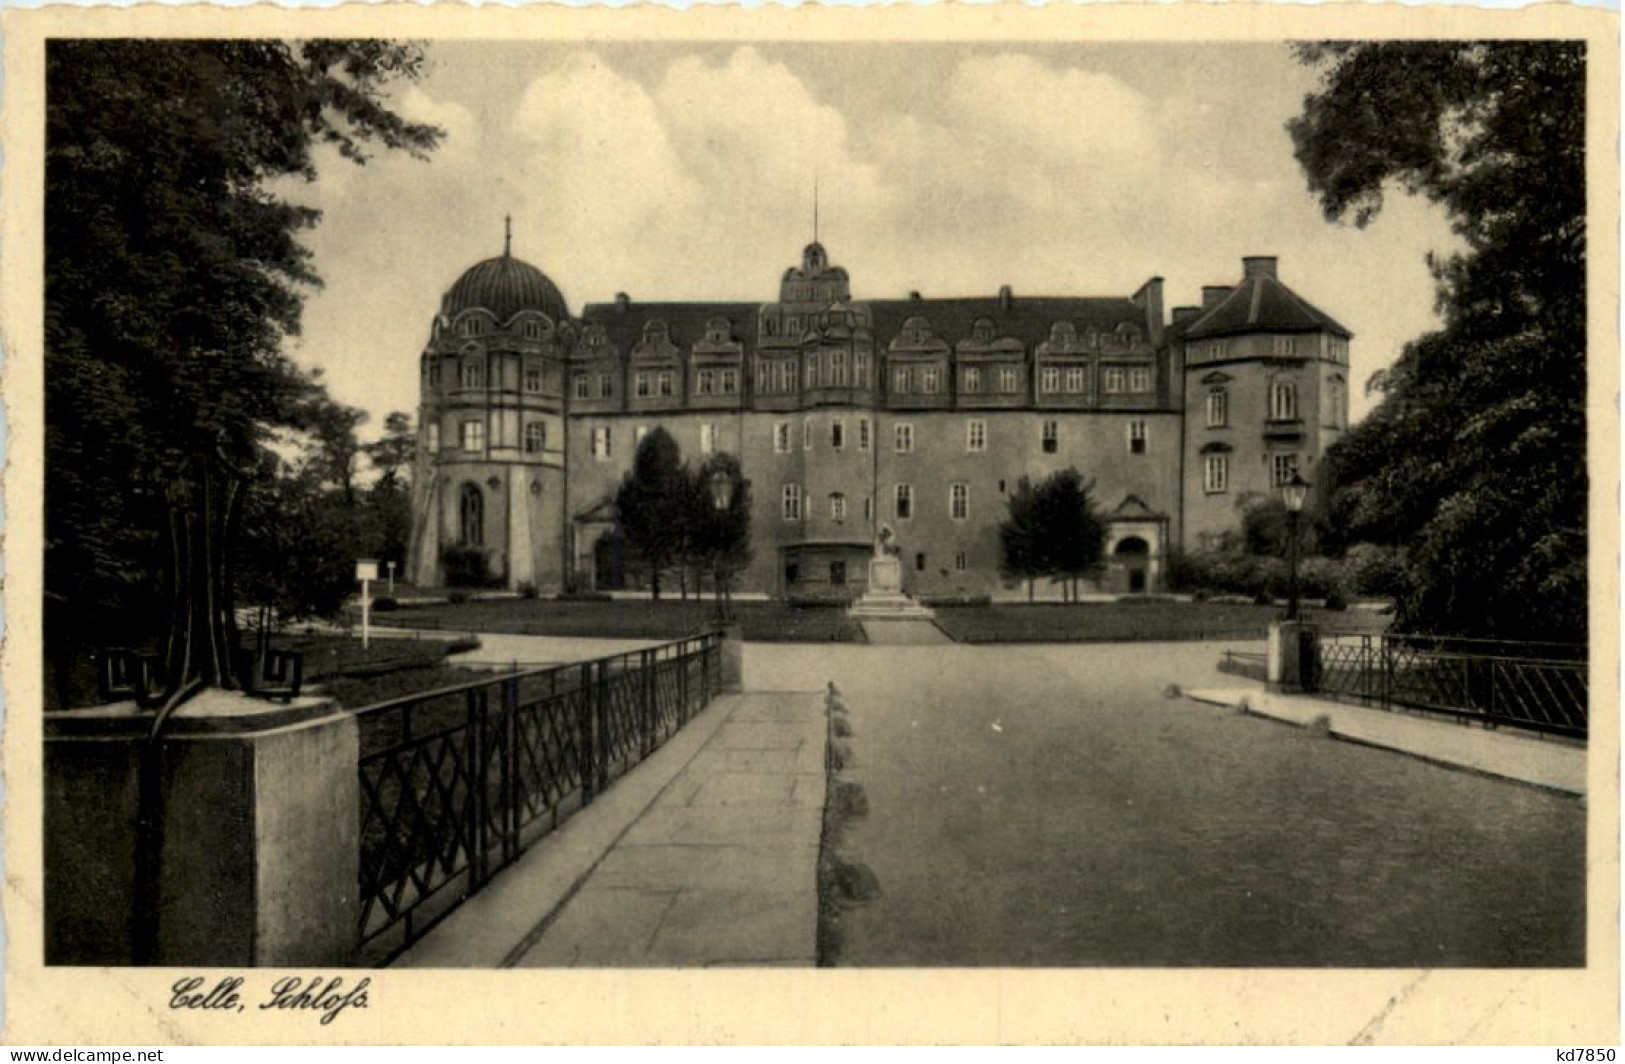 Celle - Schloss - Celle